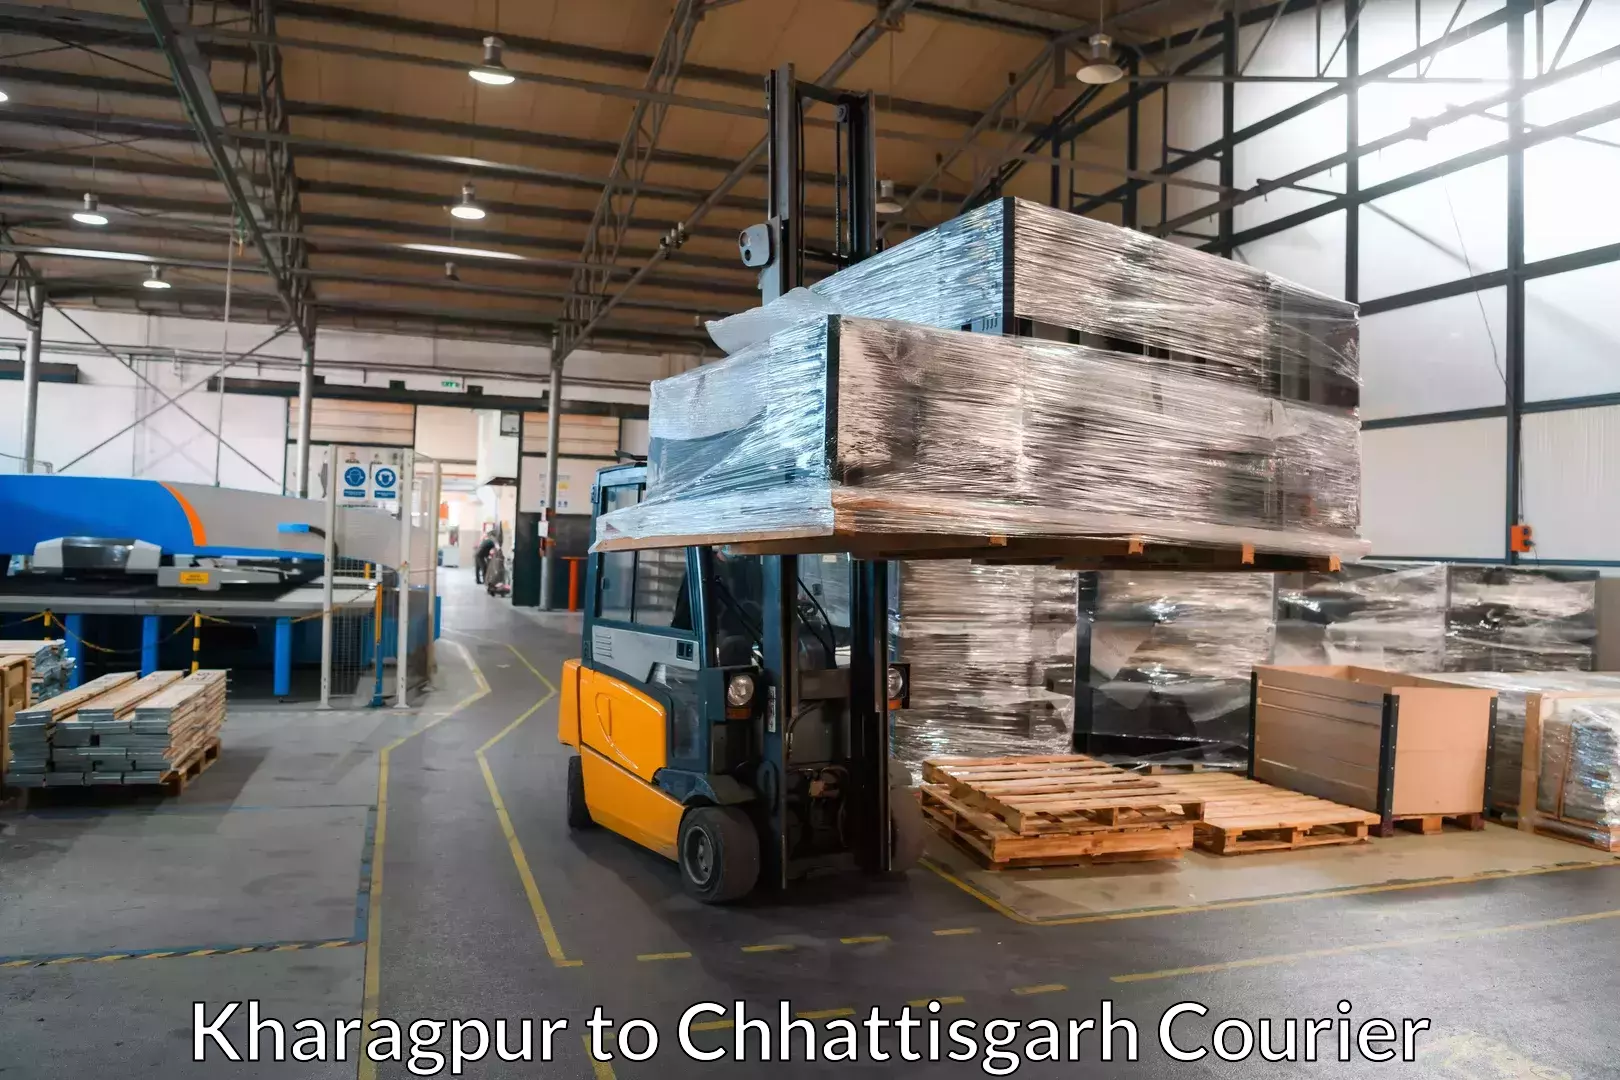 Quality moving company in Kharagpur to Kawardha